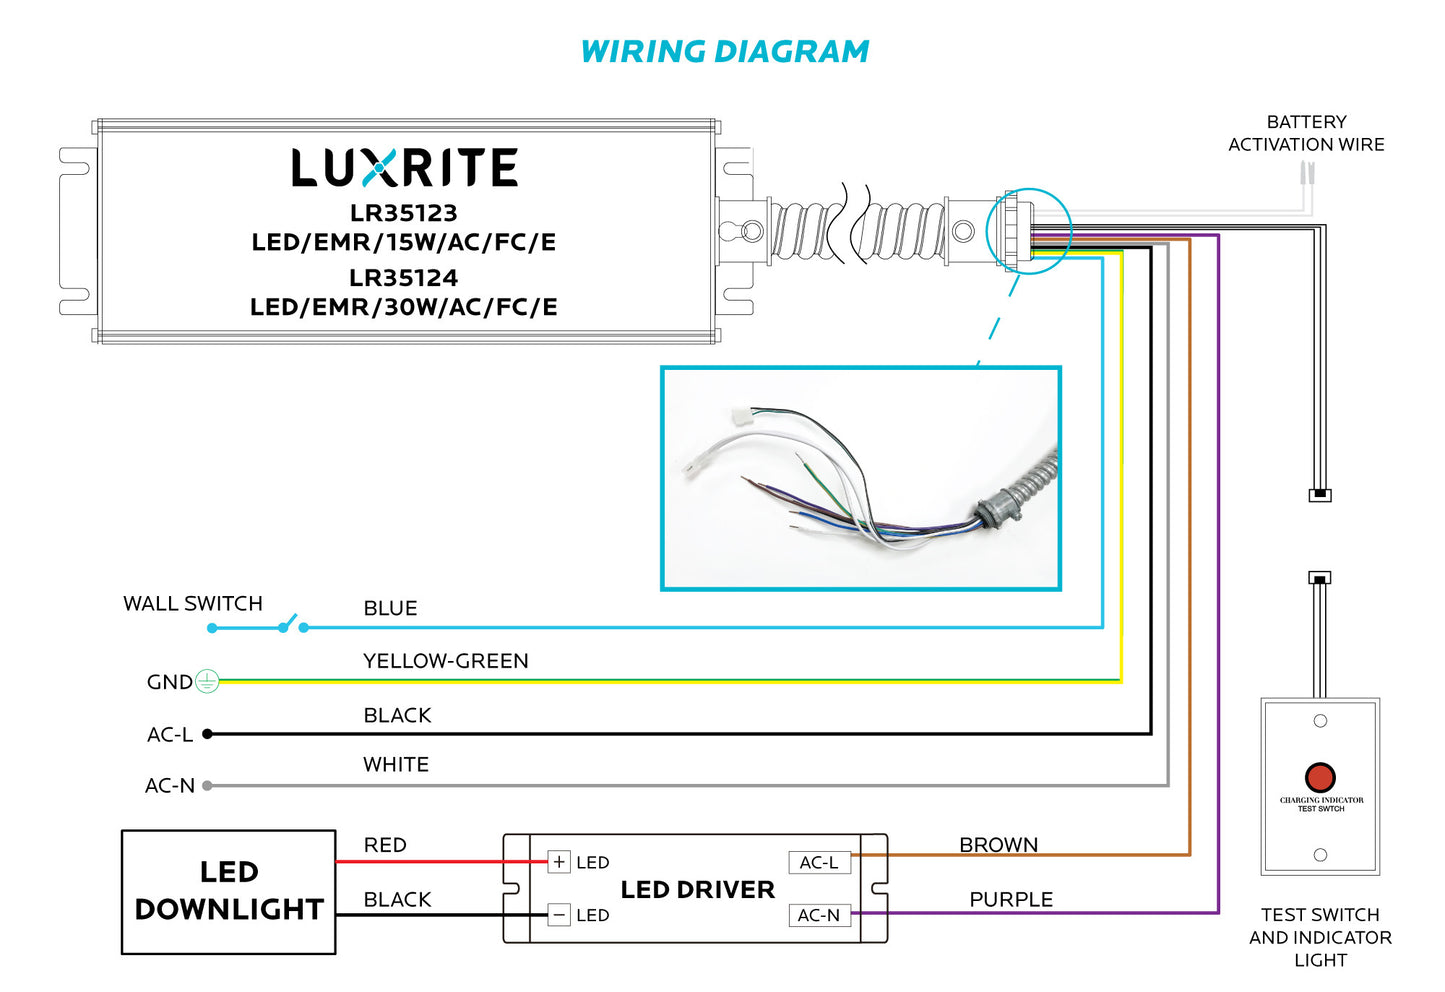 Luxrite Accessories LED/EMR/15W/AC/FC/E